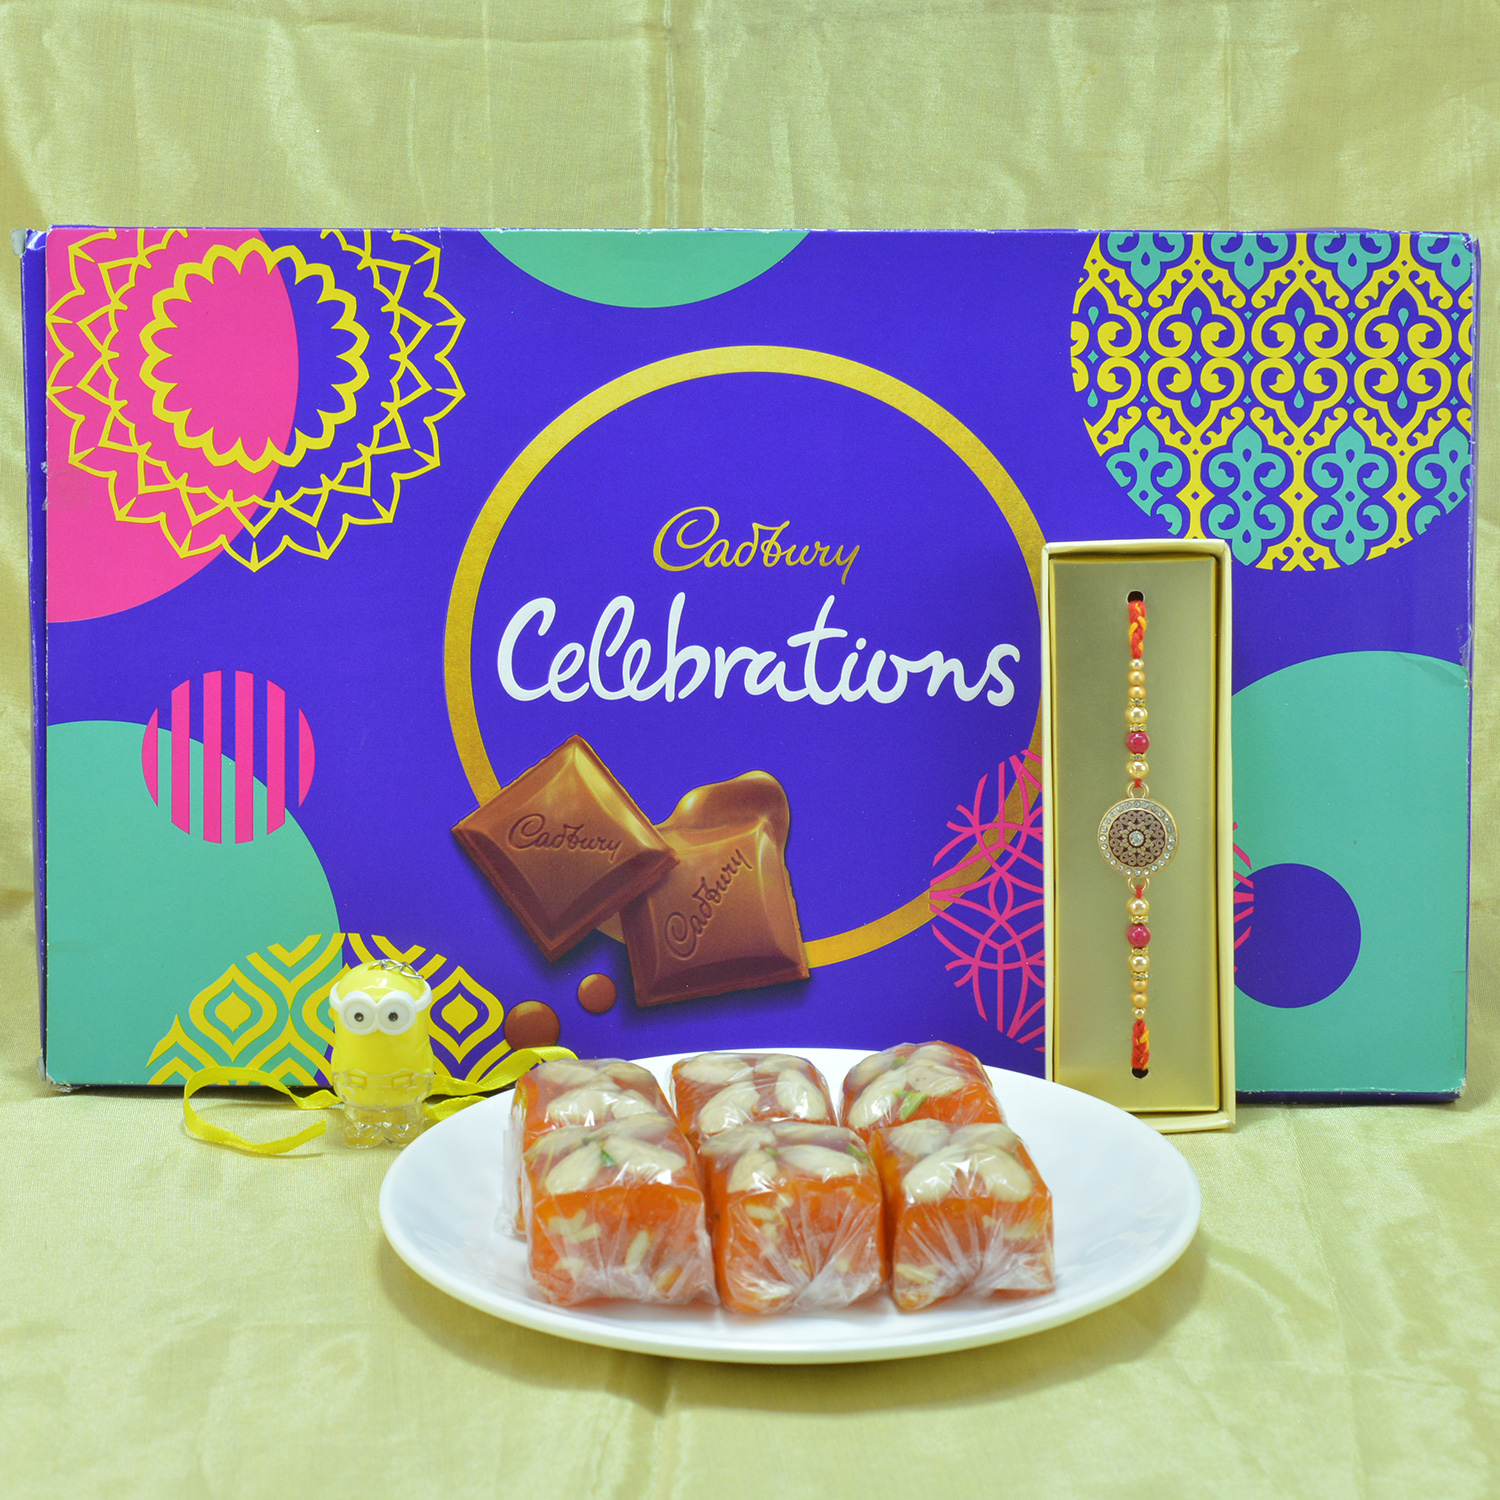 Piquant Cadbury Celebrations with Luscious Karachi Halwa along with Spectacular Beads Brother Rakhi Hamper